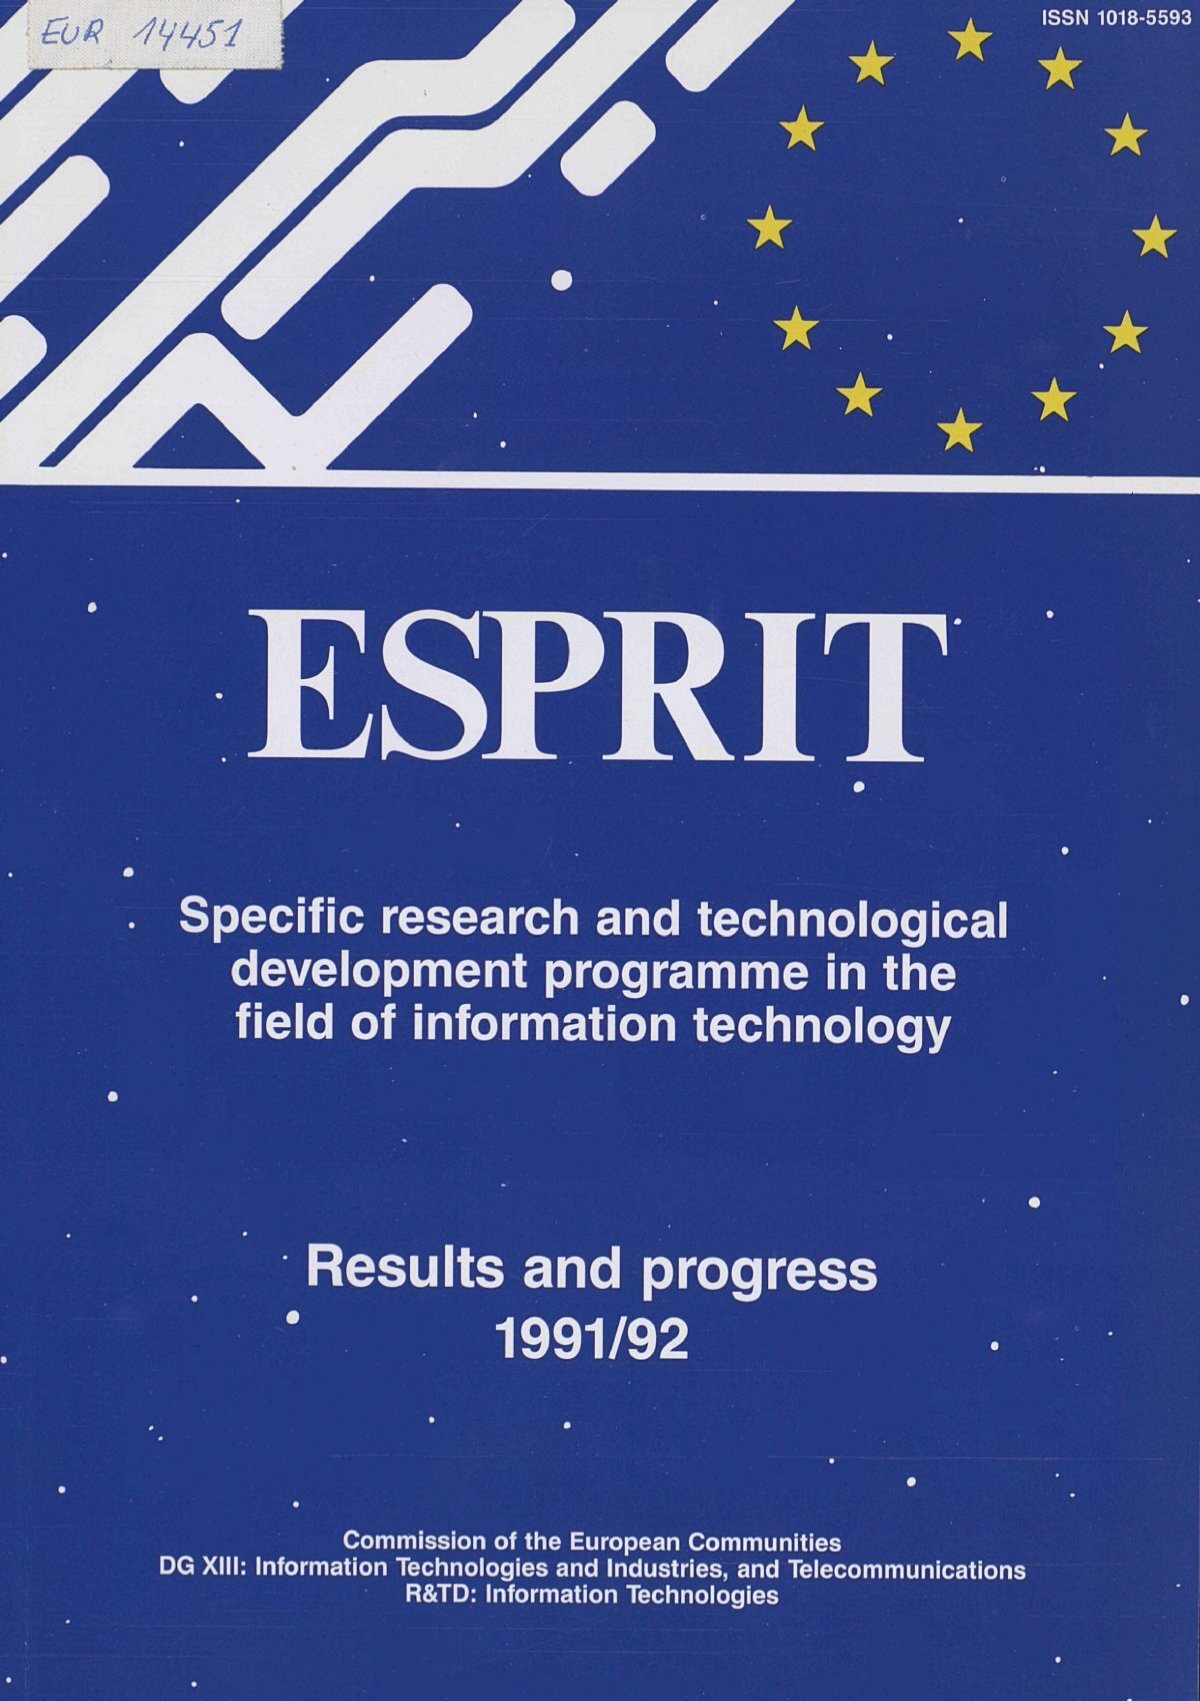 ESPRIT - Archive of European Integration